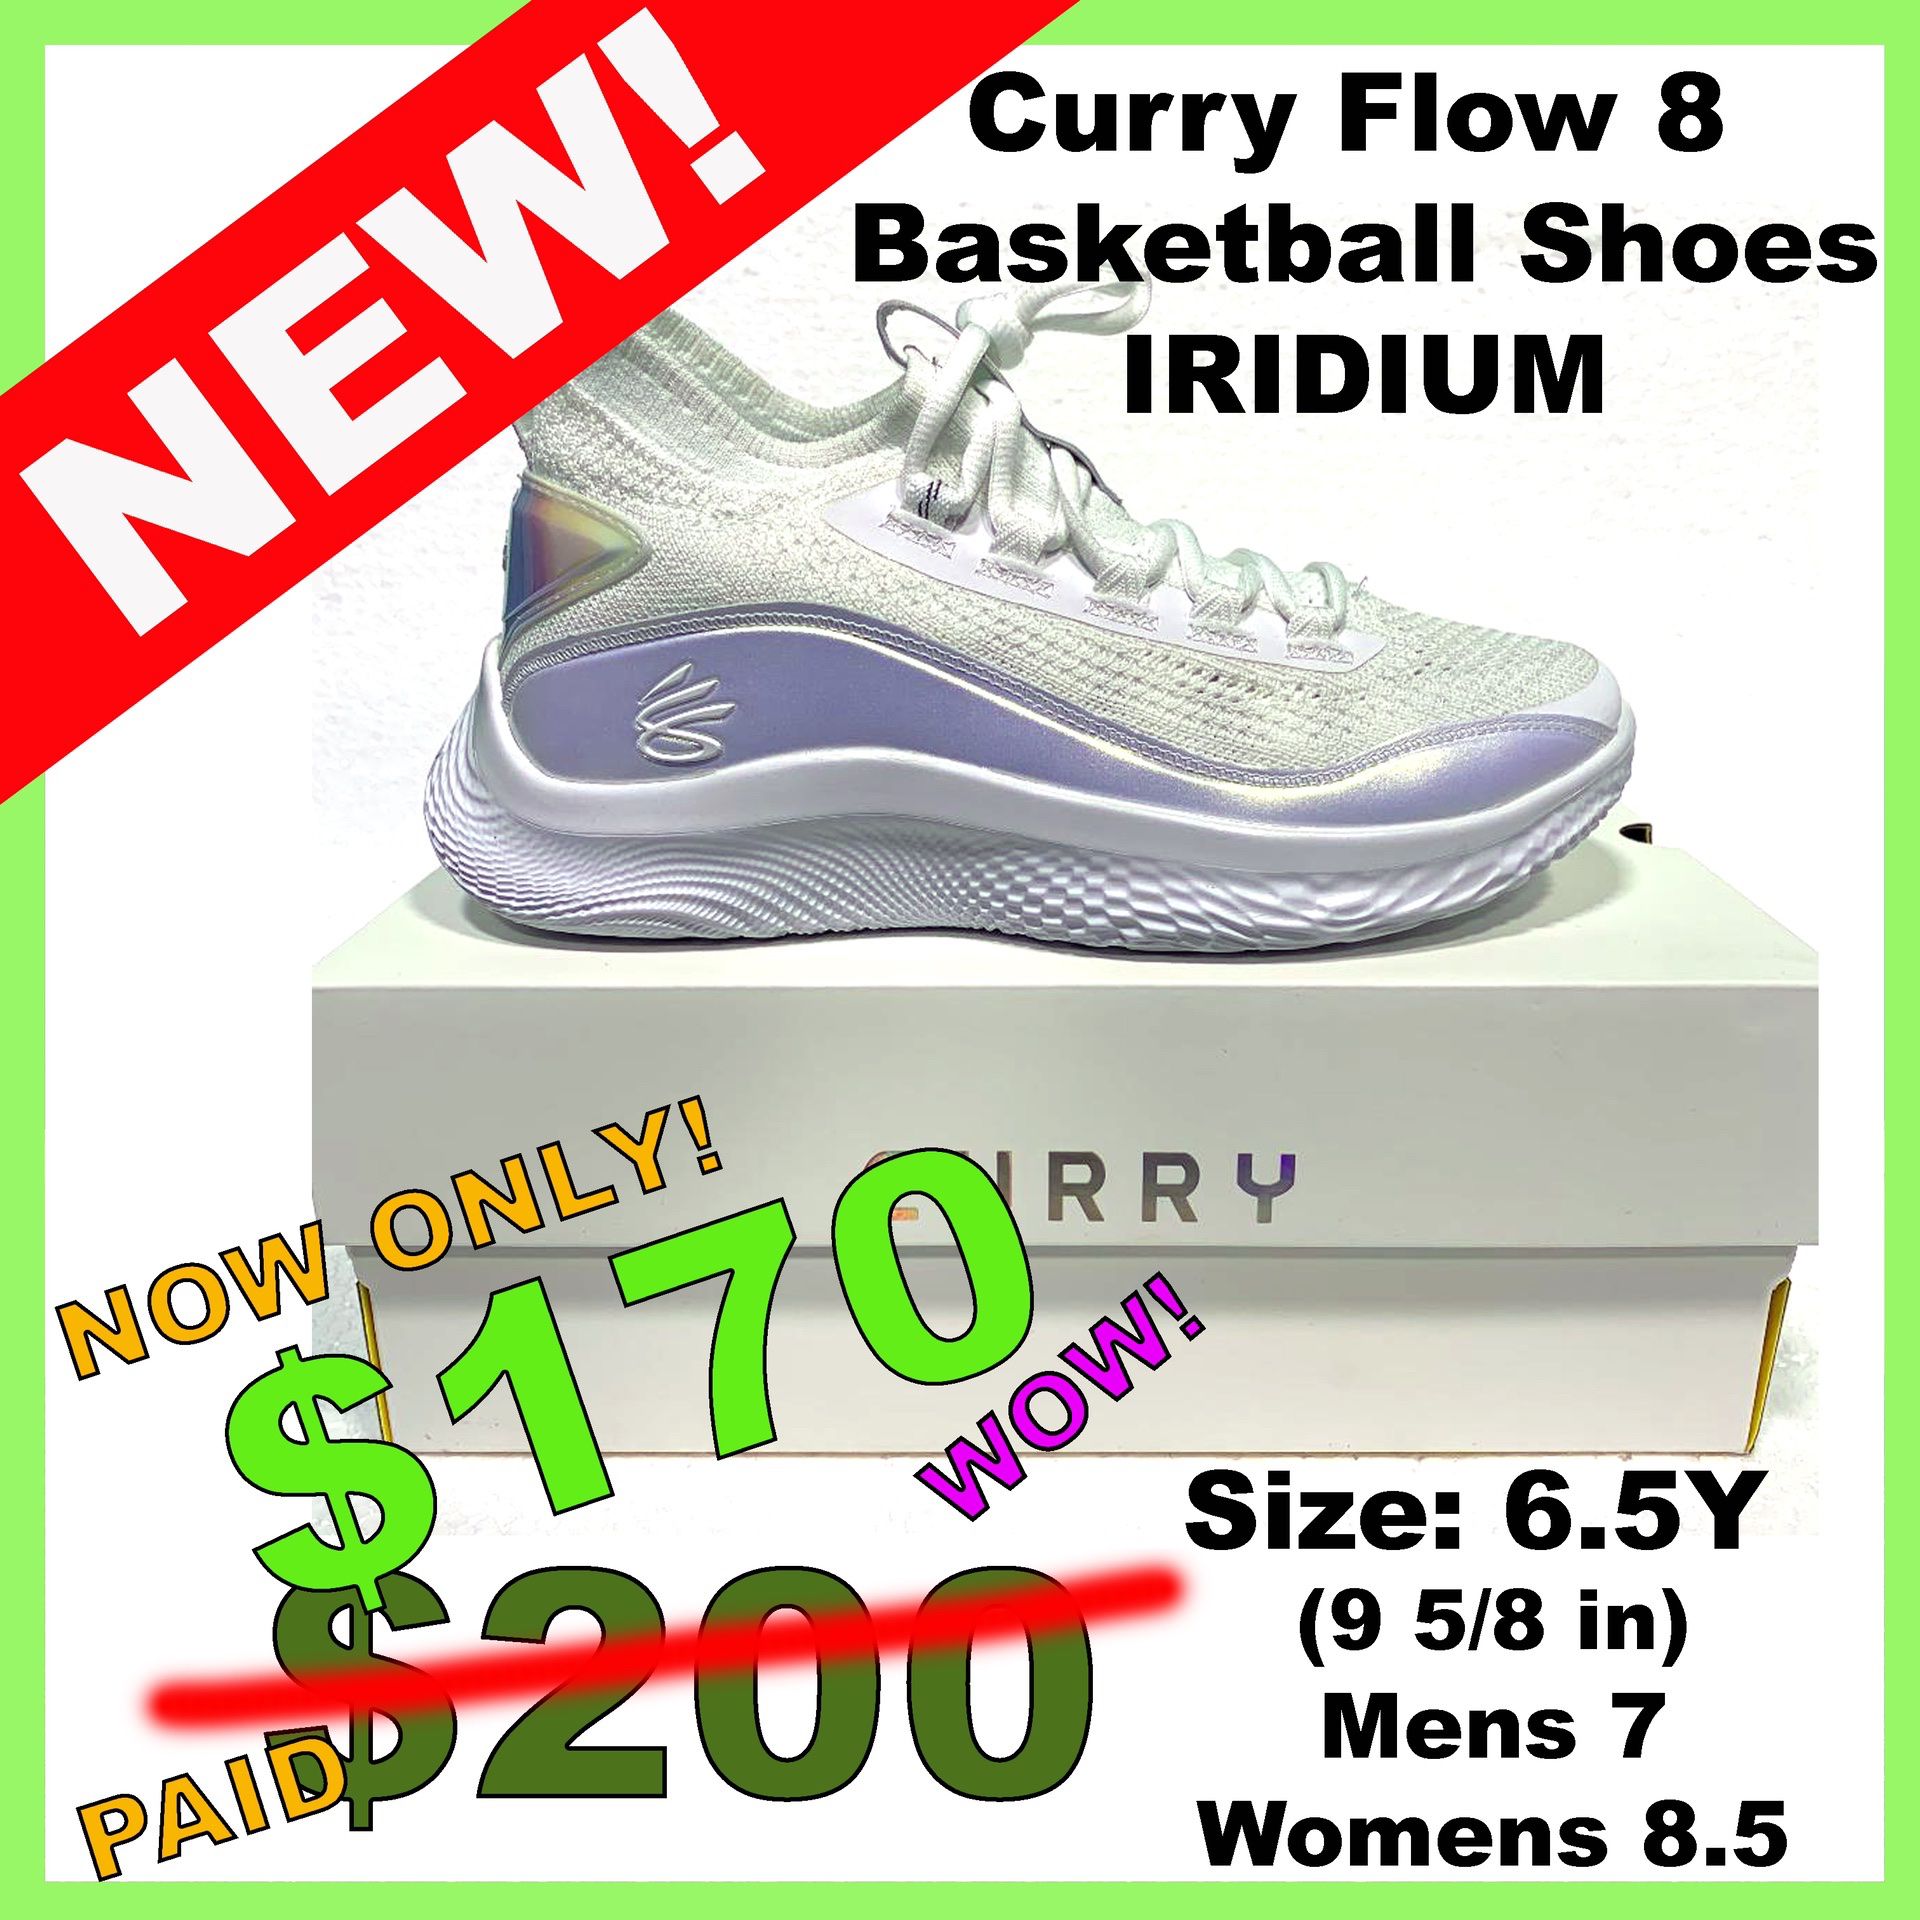 New! Under Armour Men's 8 Basketball Shoes Iridium